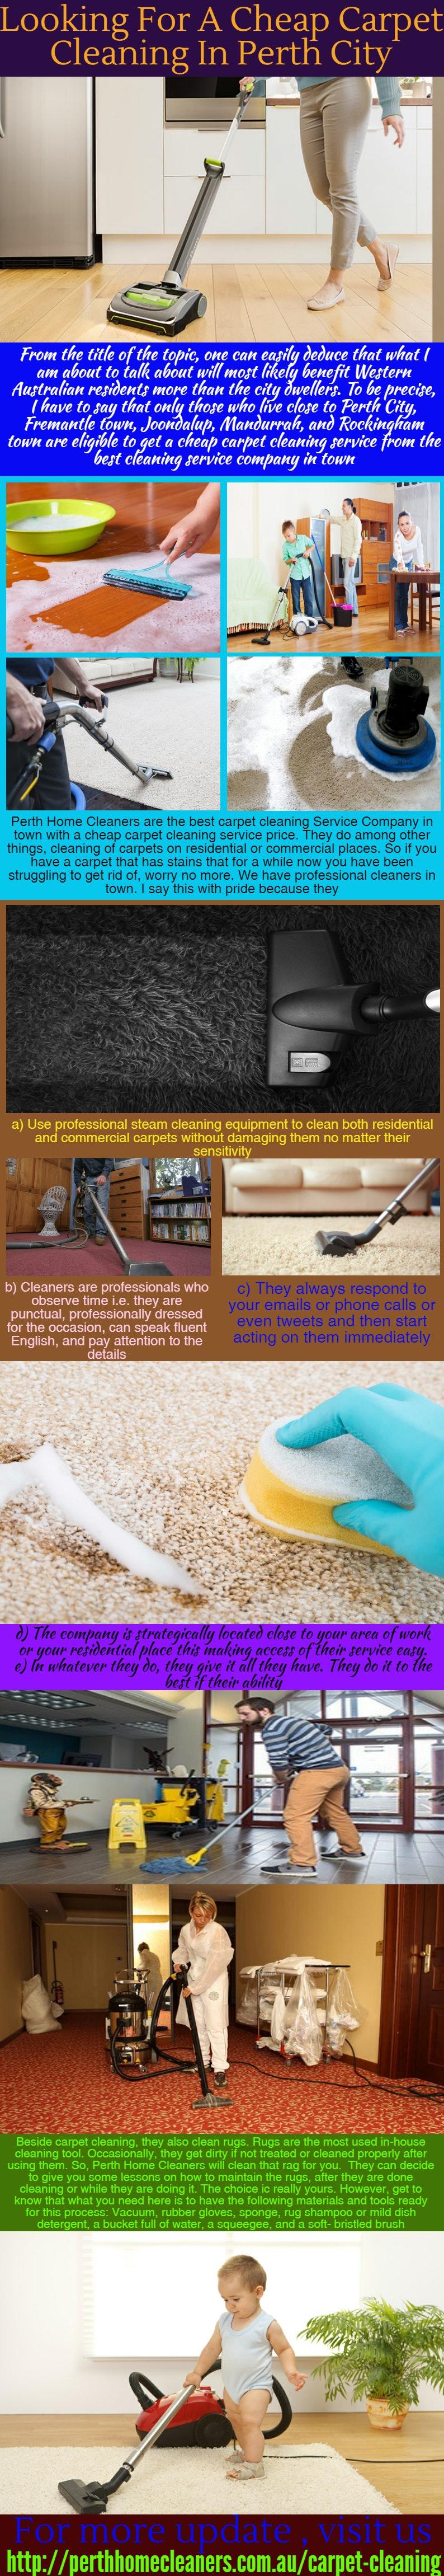 pexels-photo-399165.png?cs=srgb&dl=carpet-cleaner-perth-carpet-cleaning-perth-price-cheap-carpet-cleaning-399165.jpg&fm=jpg